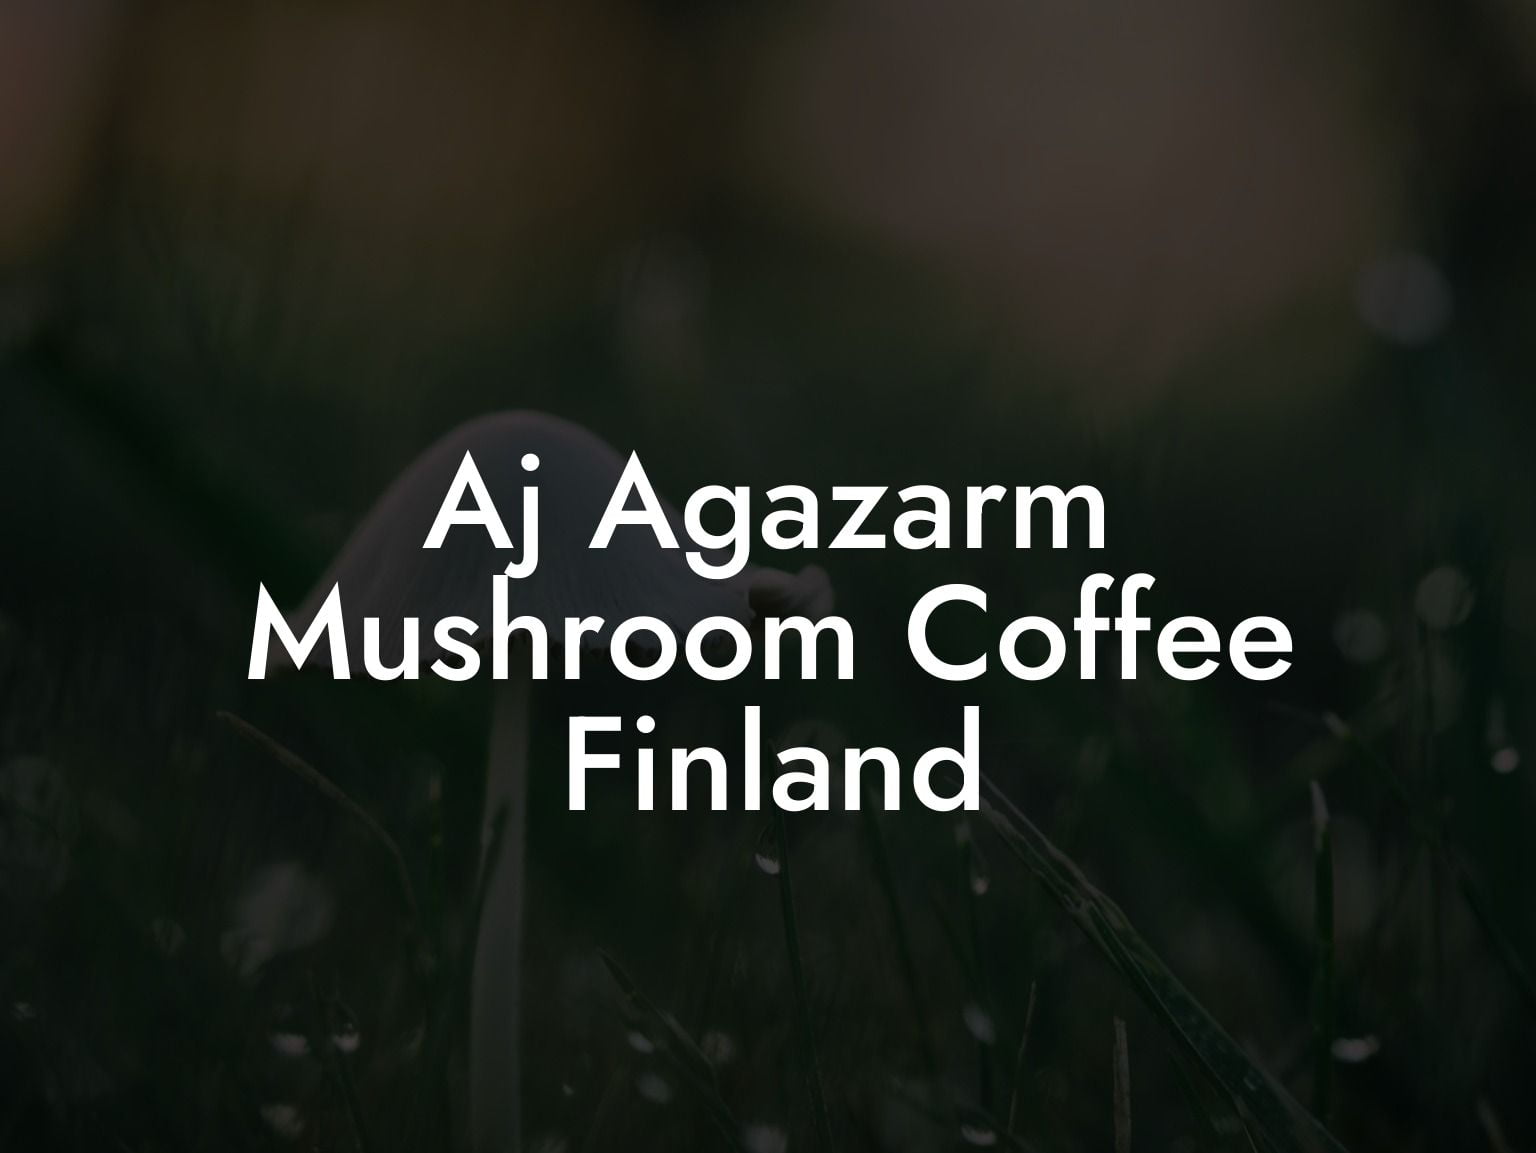 Aj Agazarm Mushroom Coffee Finland